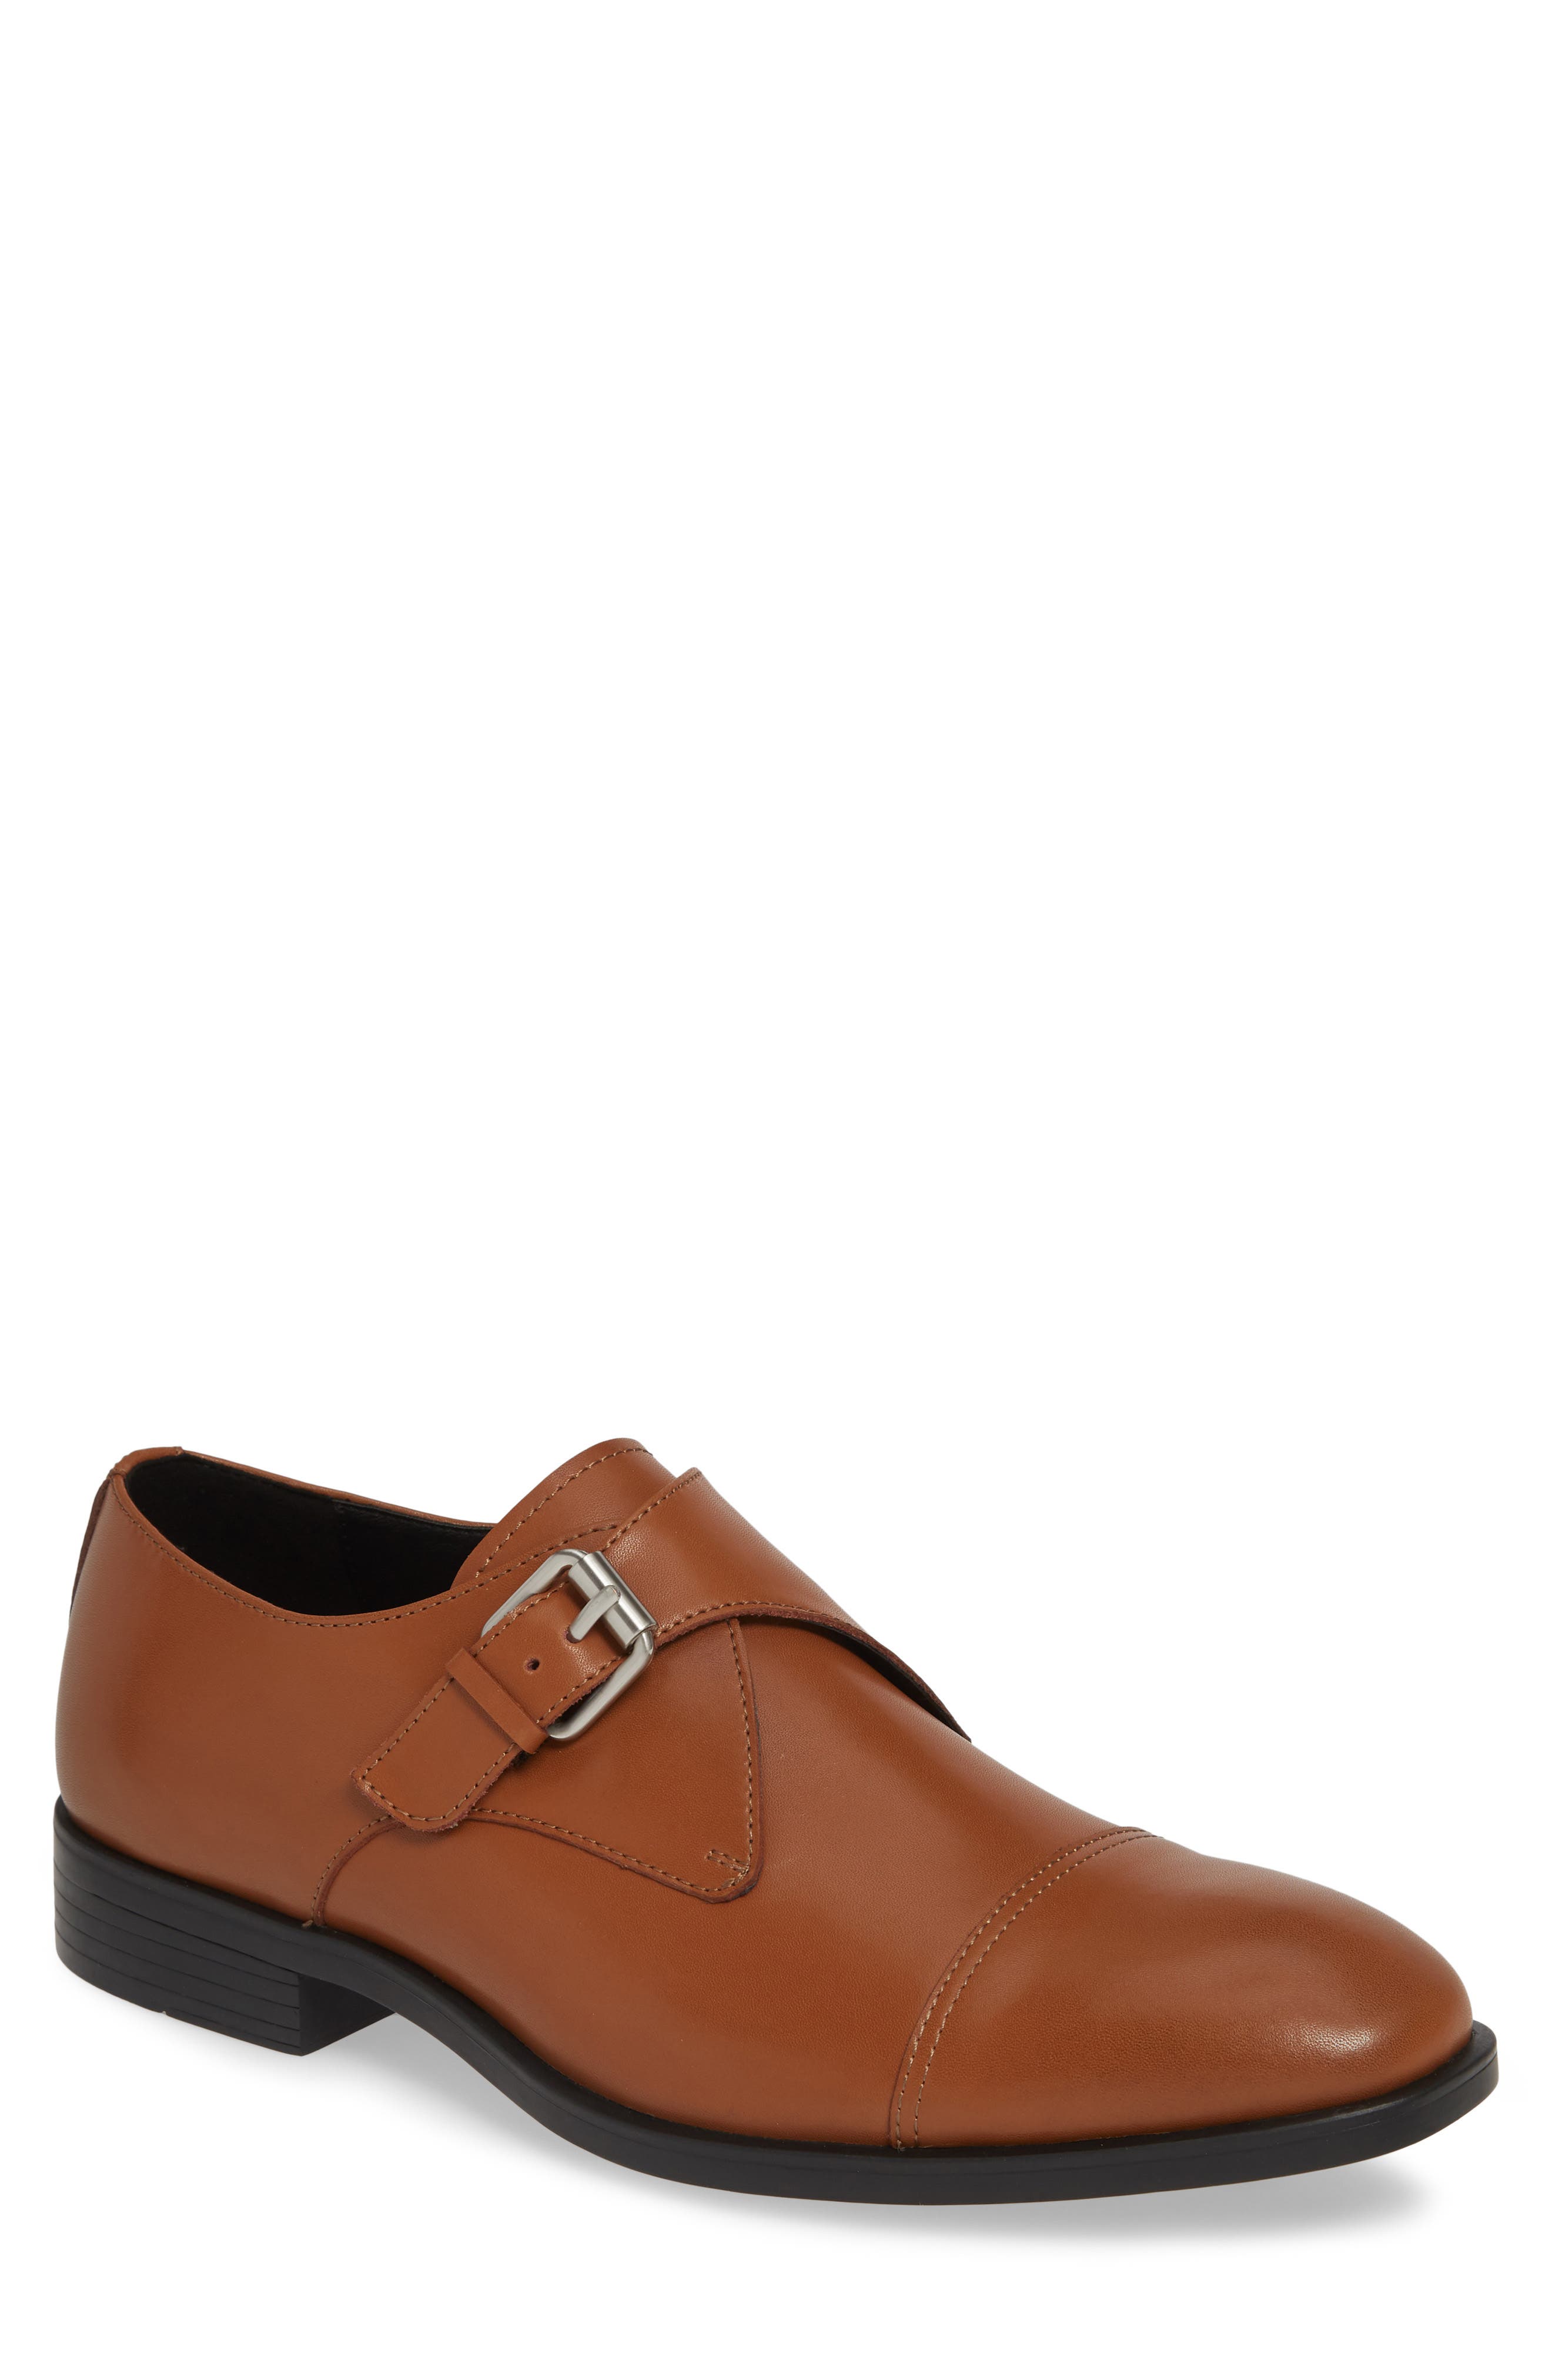 UPC 192675341165 product image for Men's Calvin Klein Channer Monk Strap Shoe, Size 8 M - Brown | upcitemdb.com